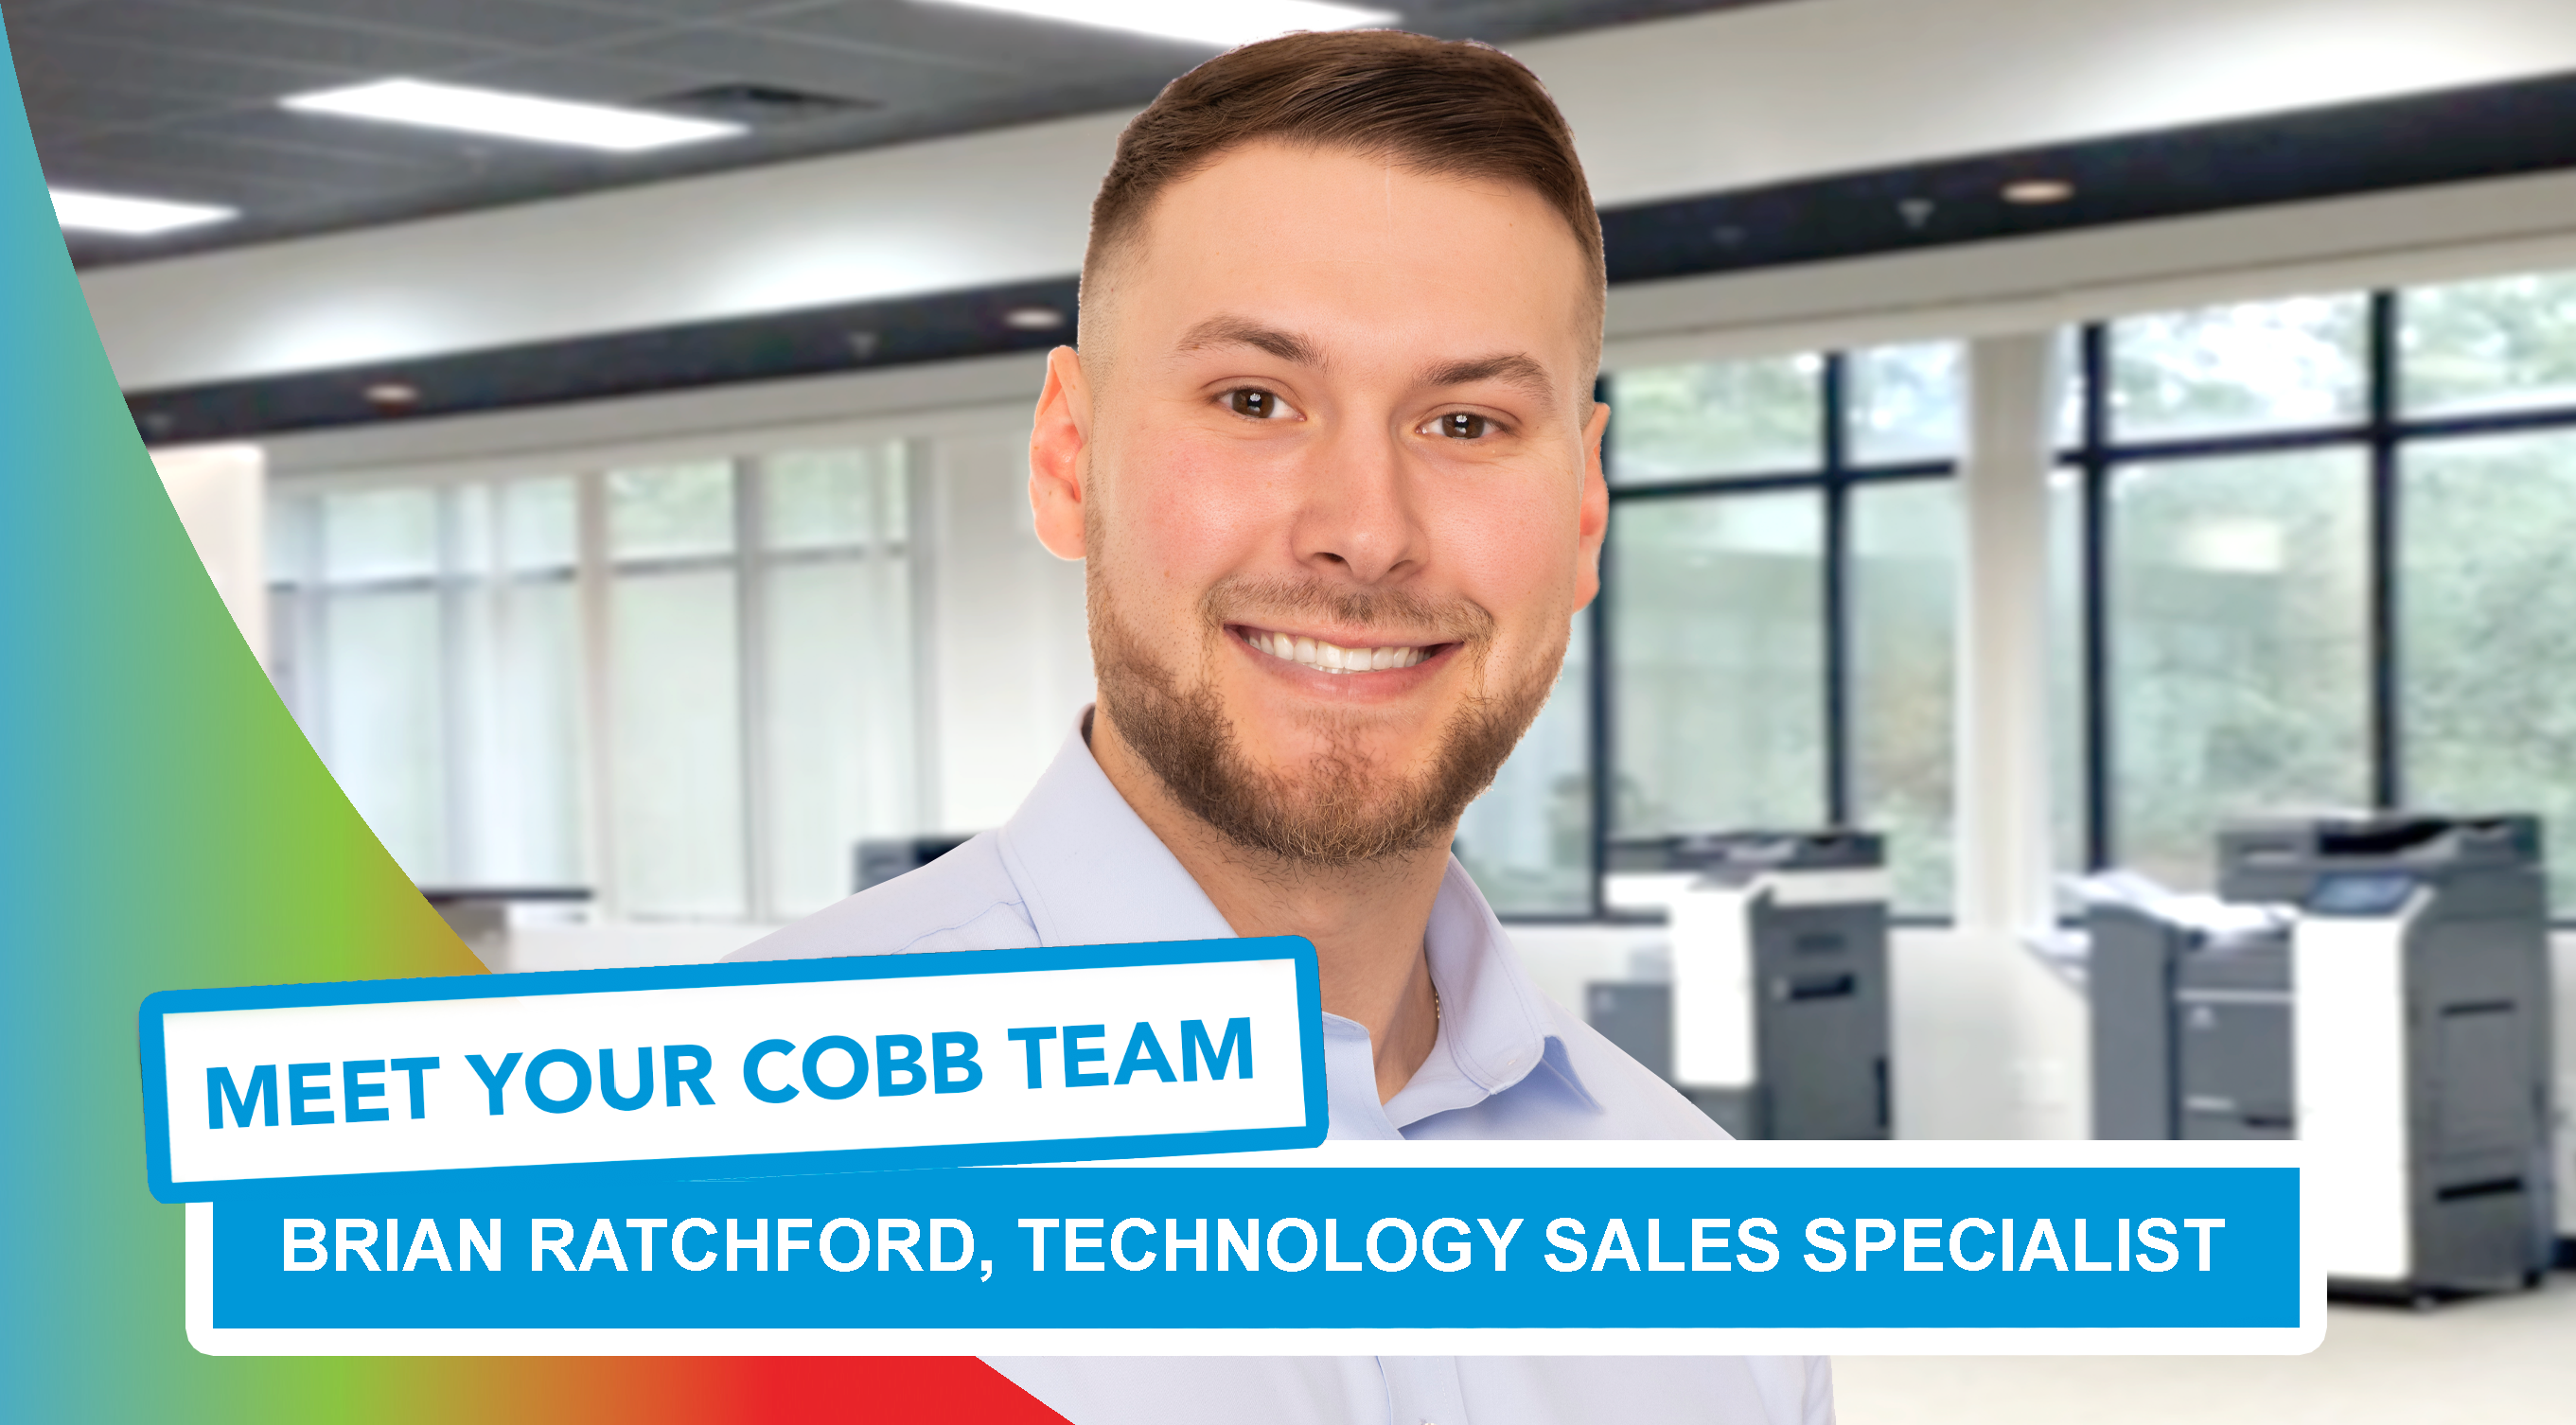 Meet Your Cobb Team: Brian Ratchford, Technology Sales Specialist